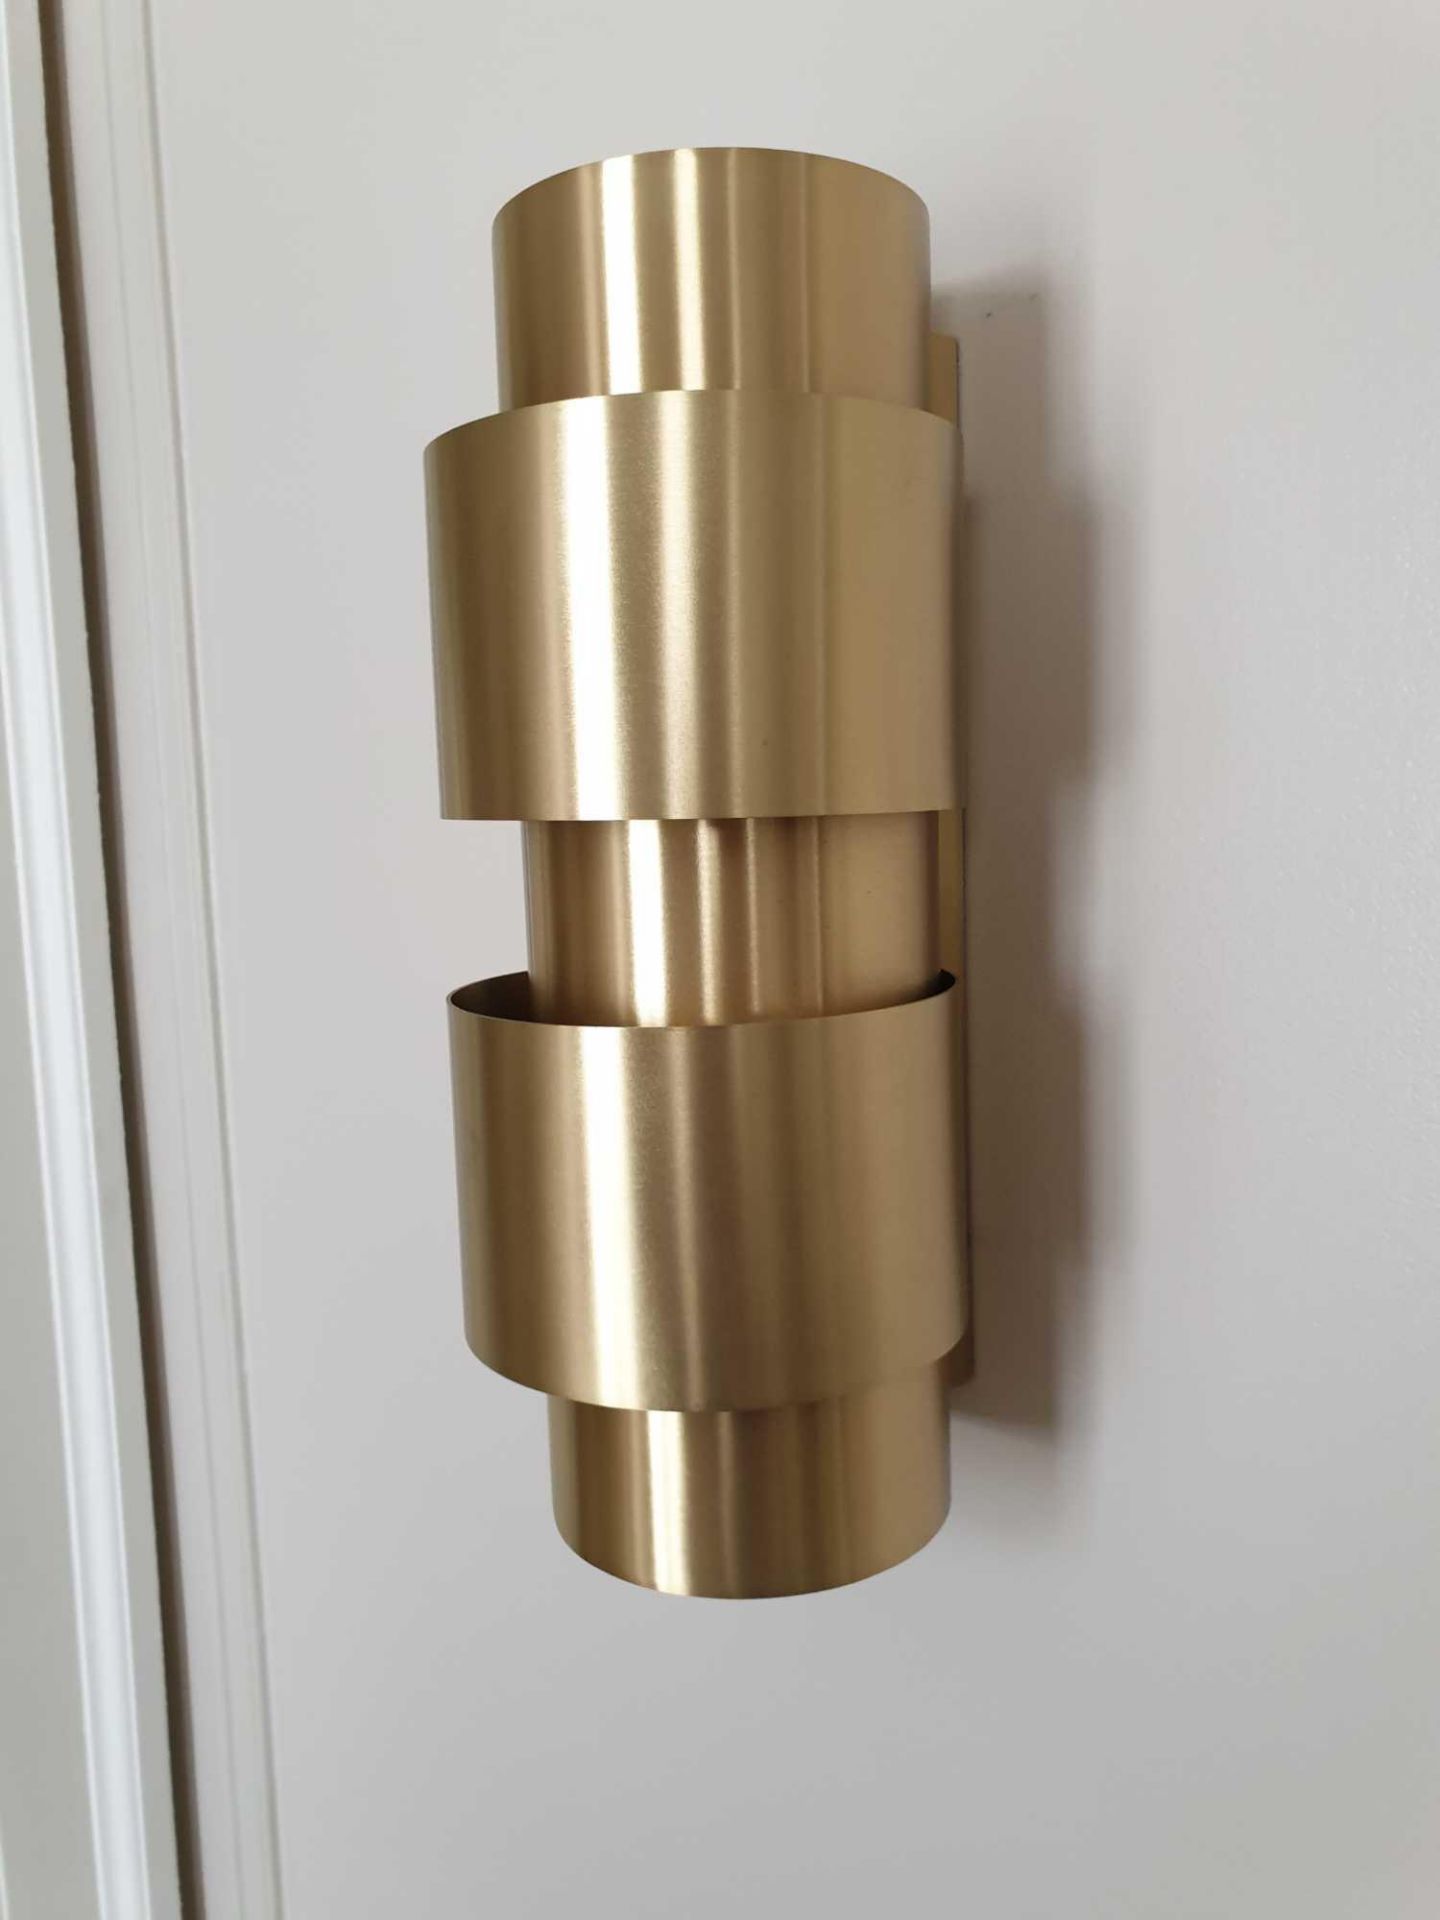 2 x LED Antique Brass 2 Light Indoor Wall Light Antique Brass 30CM (Room 723 & 724)